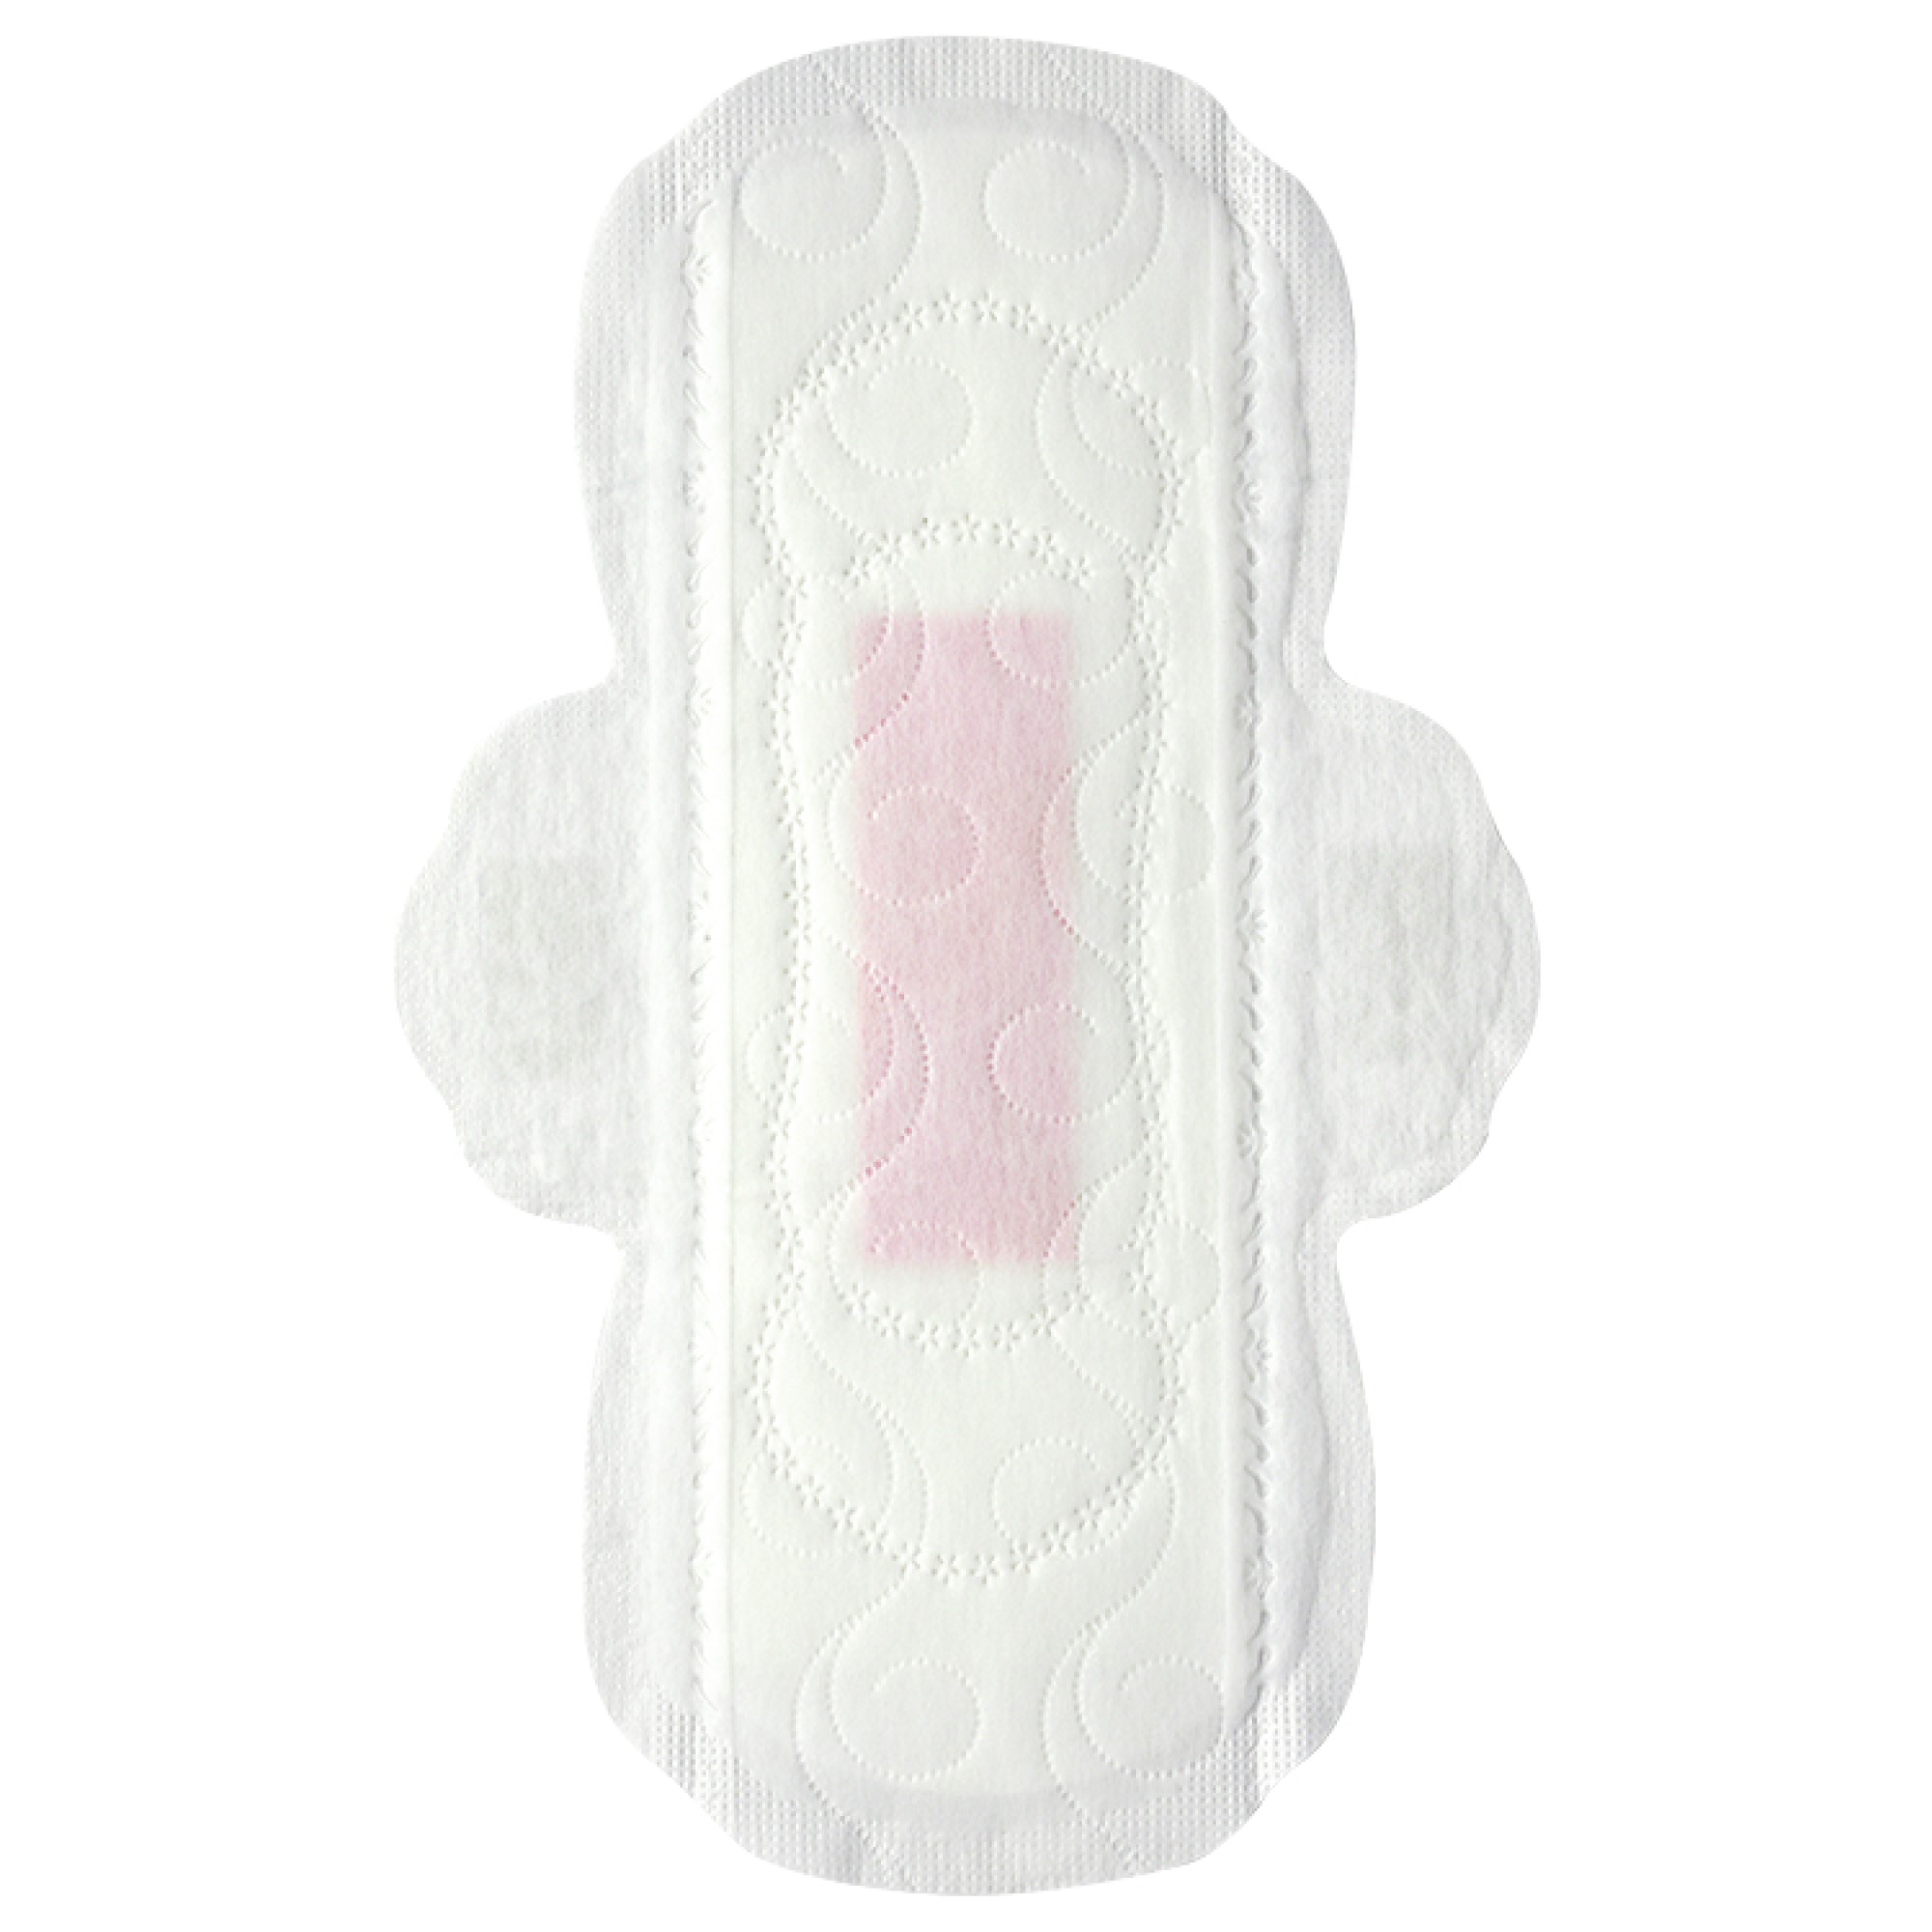 Wholesale cotton sanitary pads company-1